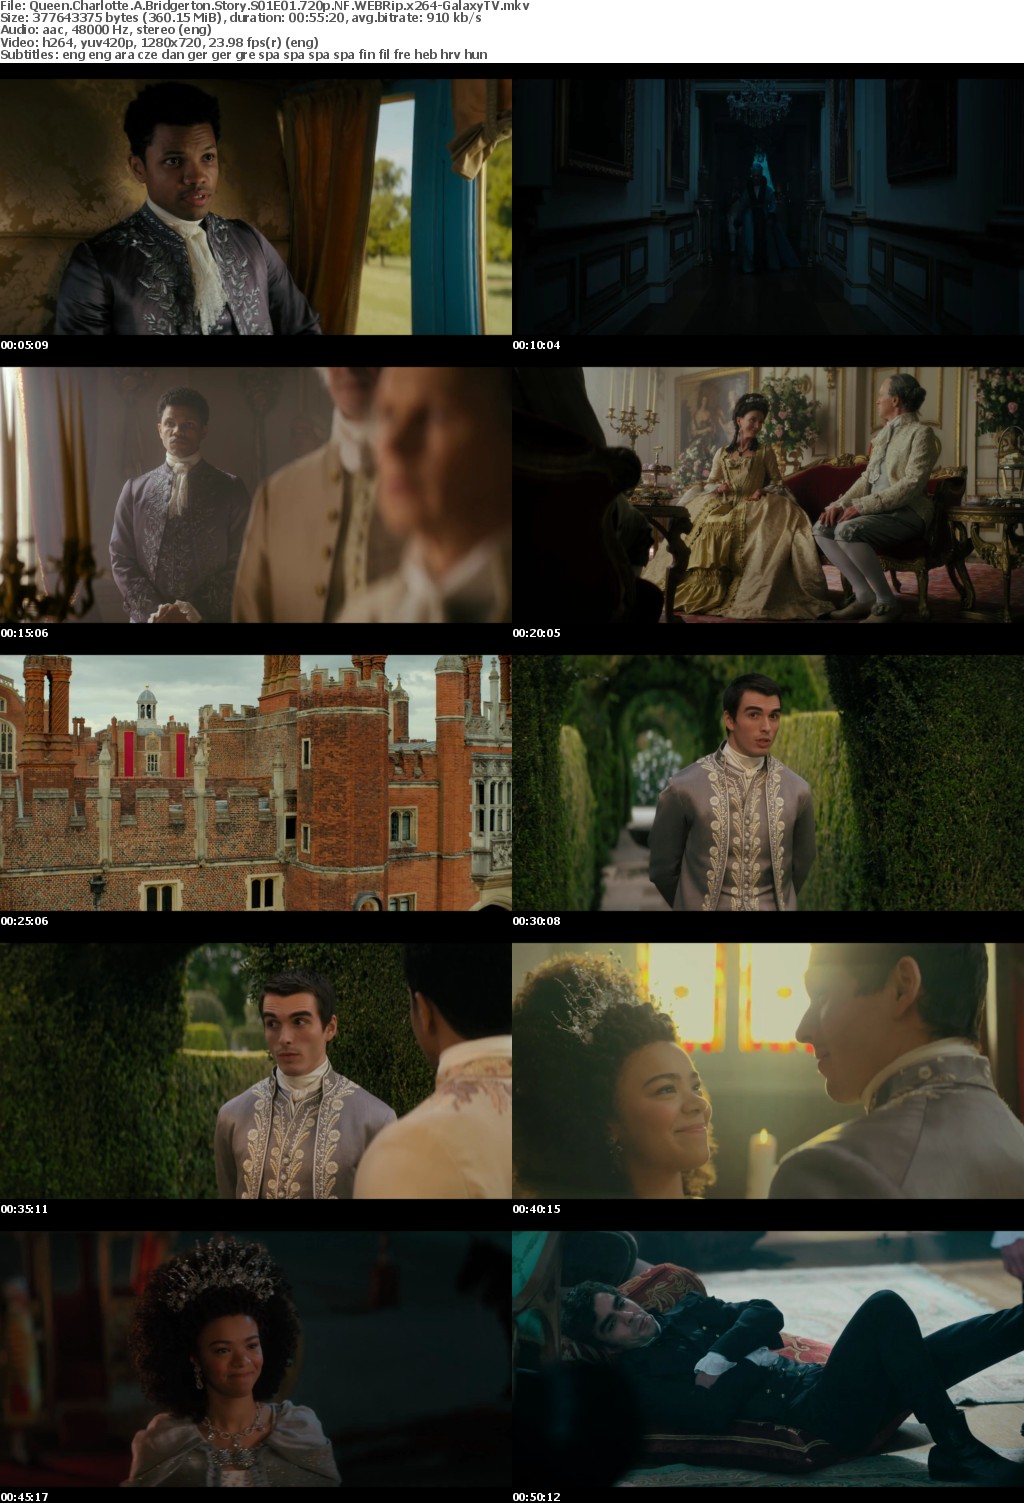 Queen Charlotte A Bridgerton Story S01 COMPLETE 720p NF WEBRip x264-GalaxyTV